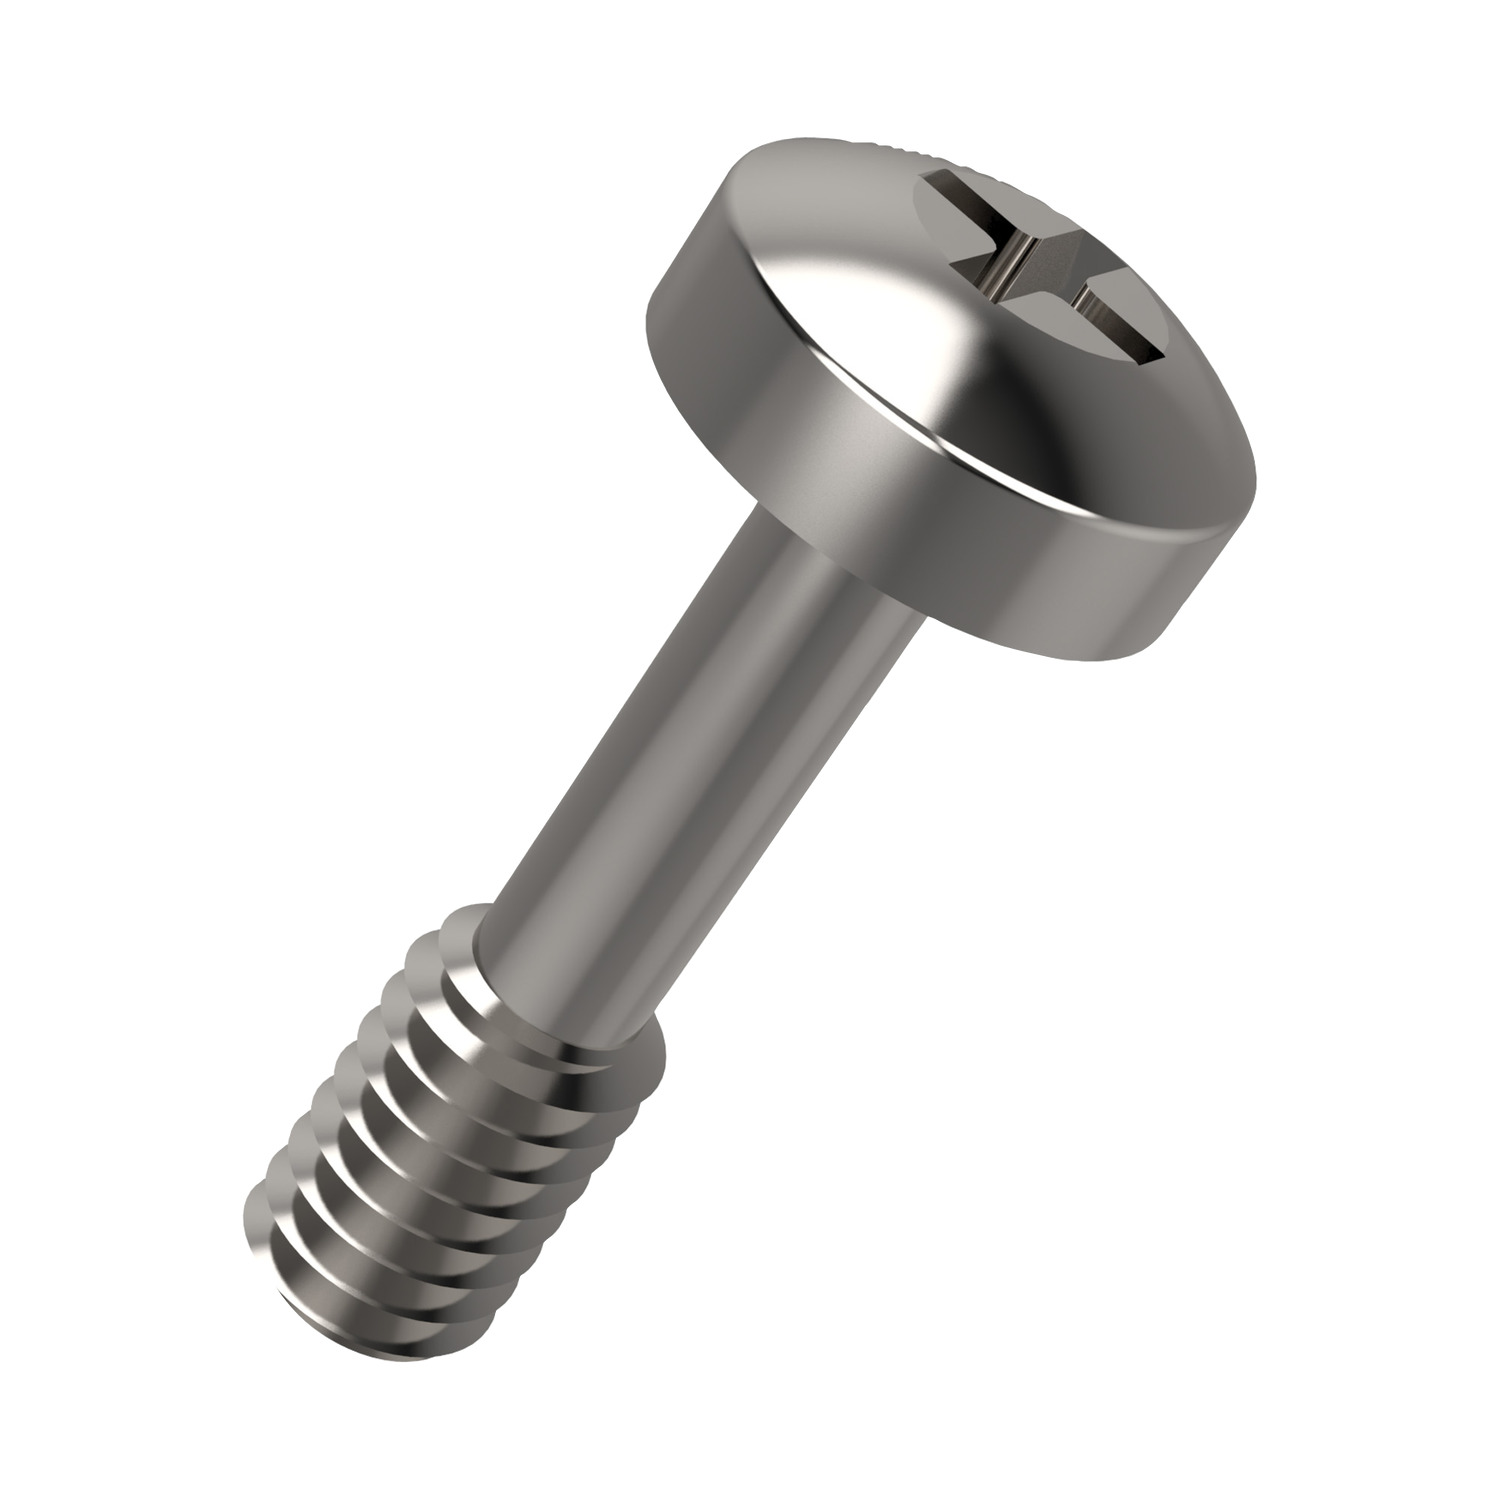 P0157.060-016-A2 Captive screws pan philips drive M6x16 stainless 303 series, 1.4305 EC:20180157 WG:05063055292603